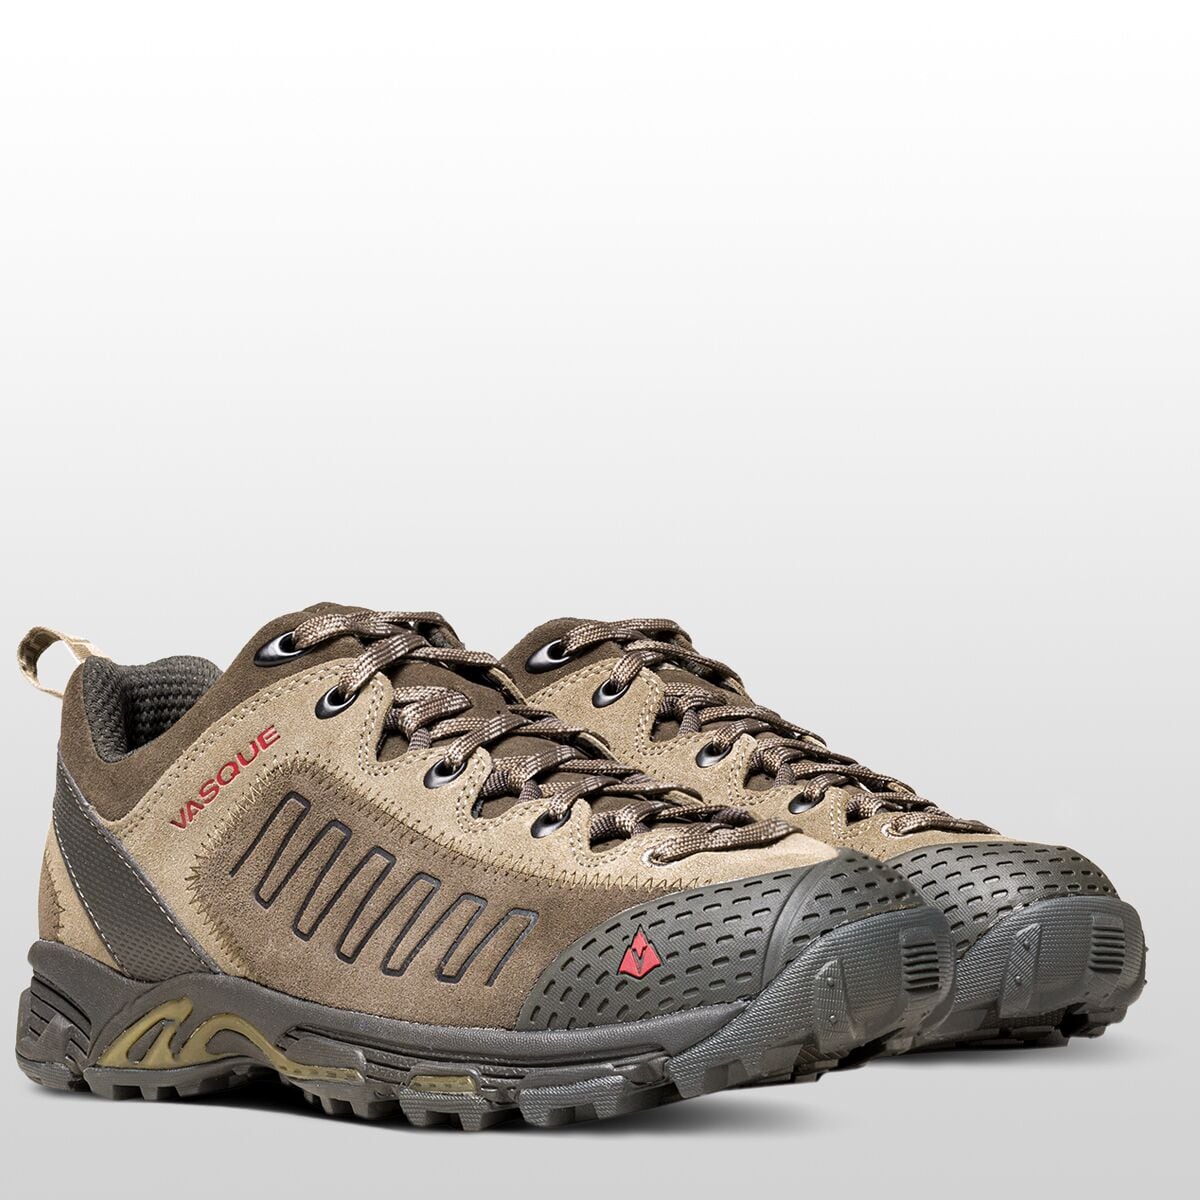 Vasque Men's Juxt Multisport Shoe,Peat/Sudan Brown,11.5 M 